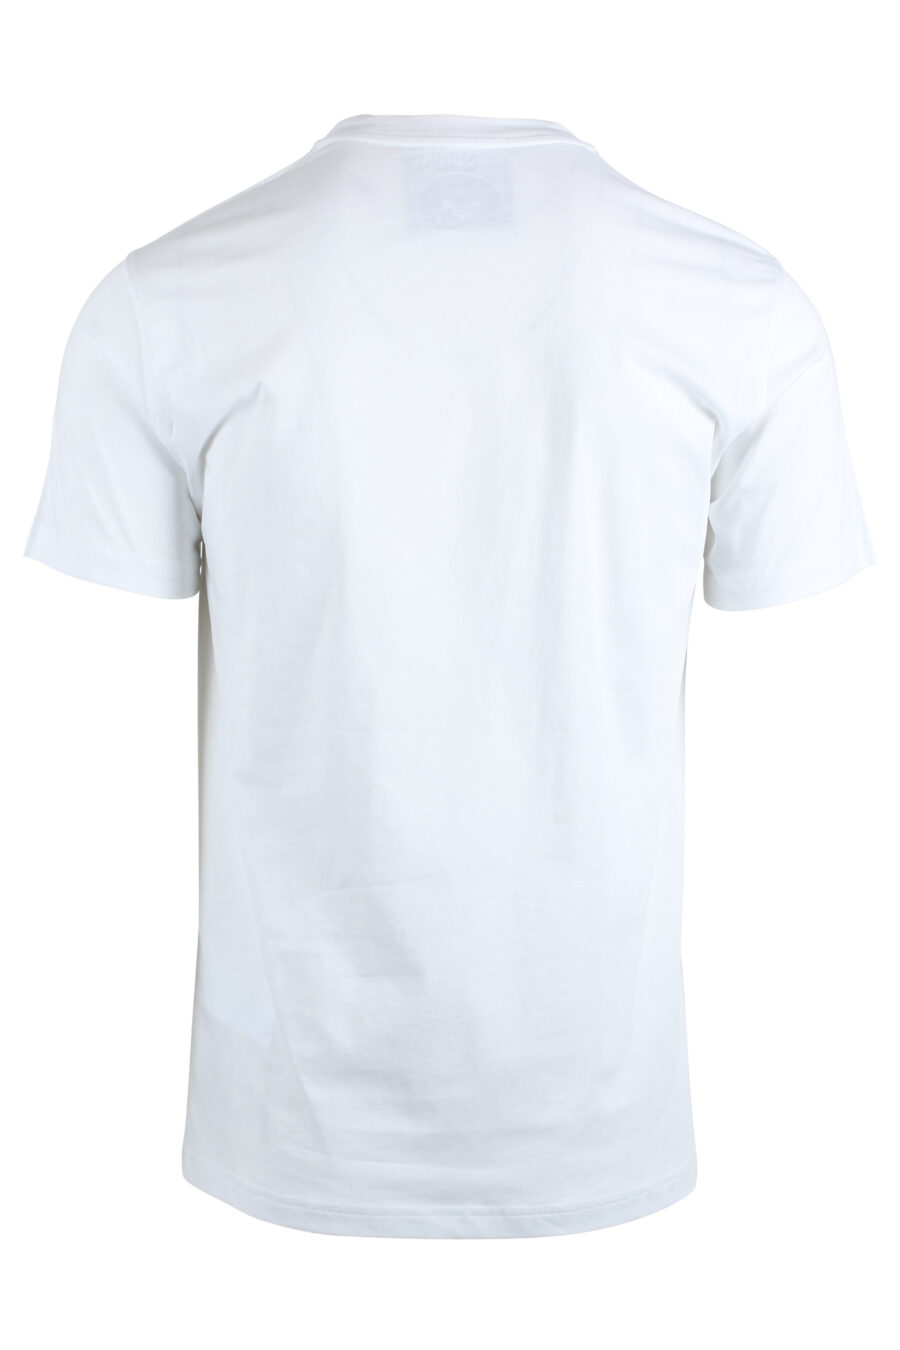 T-shirt blanc avec maxilogo "this is not moschino toy" - IMG 4772